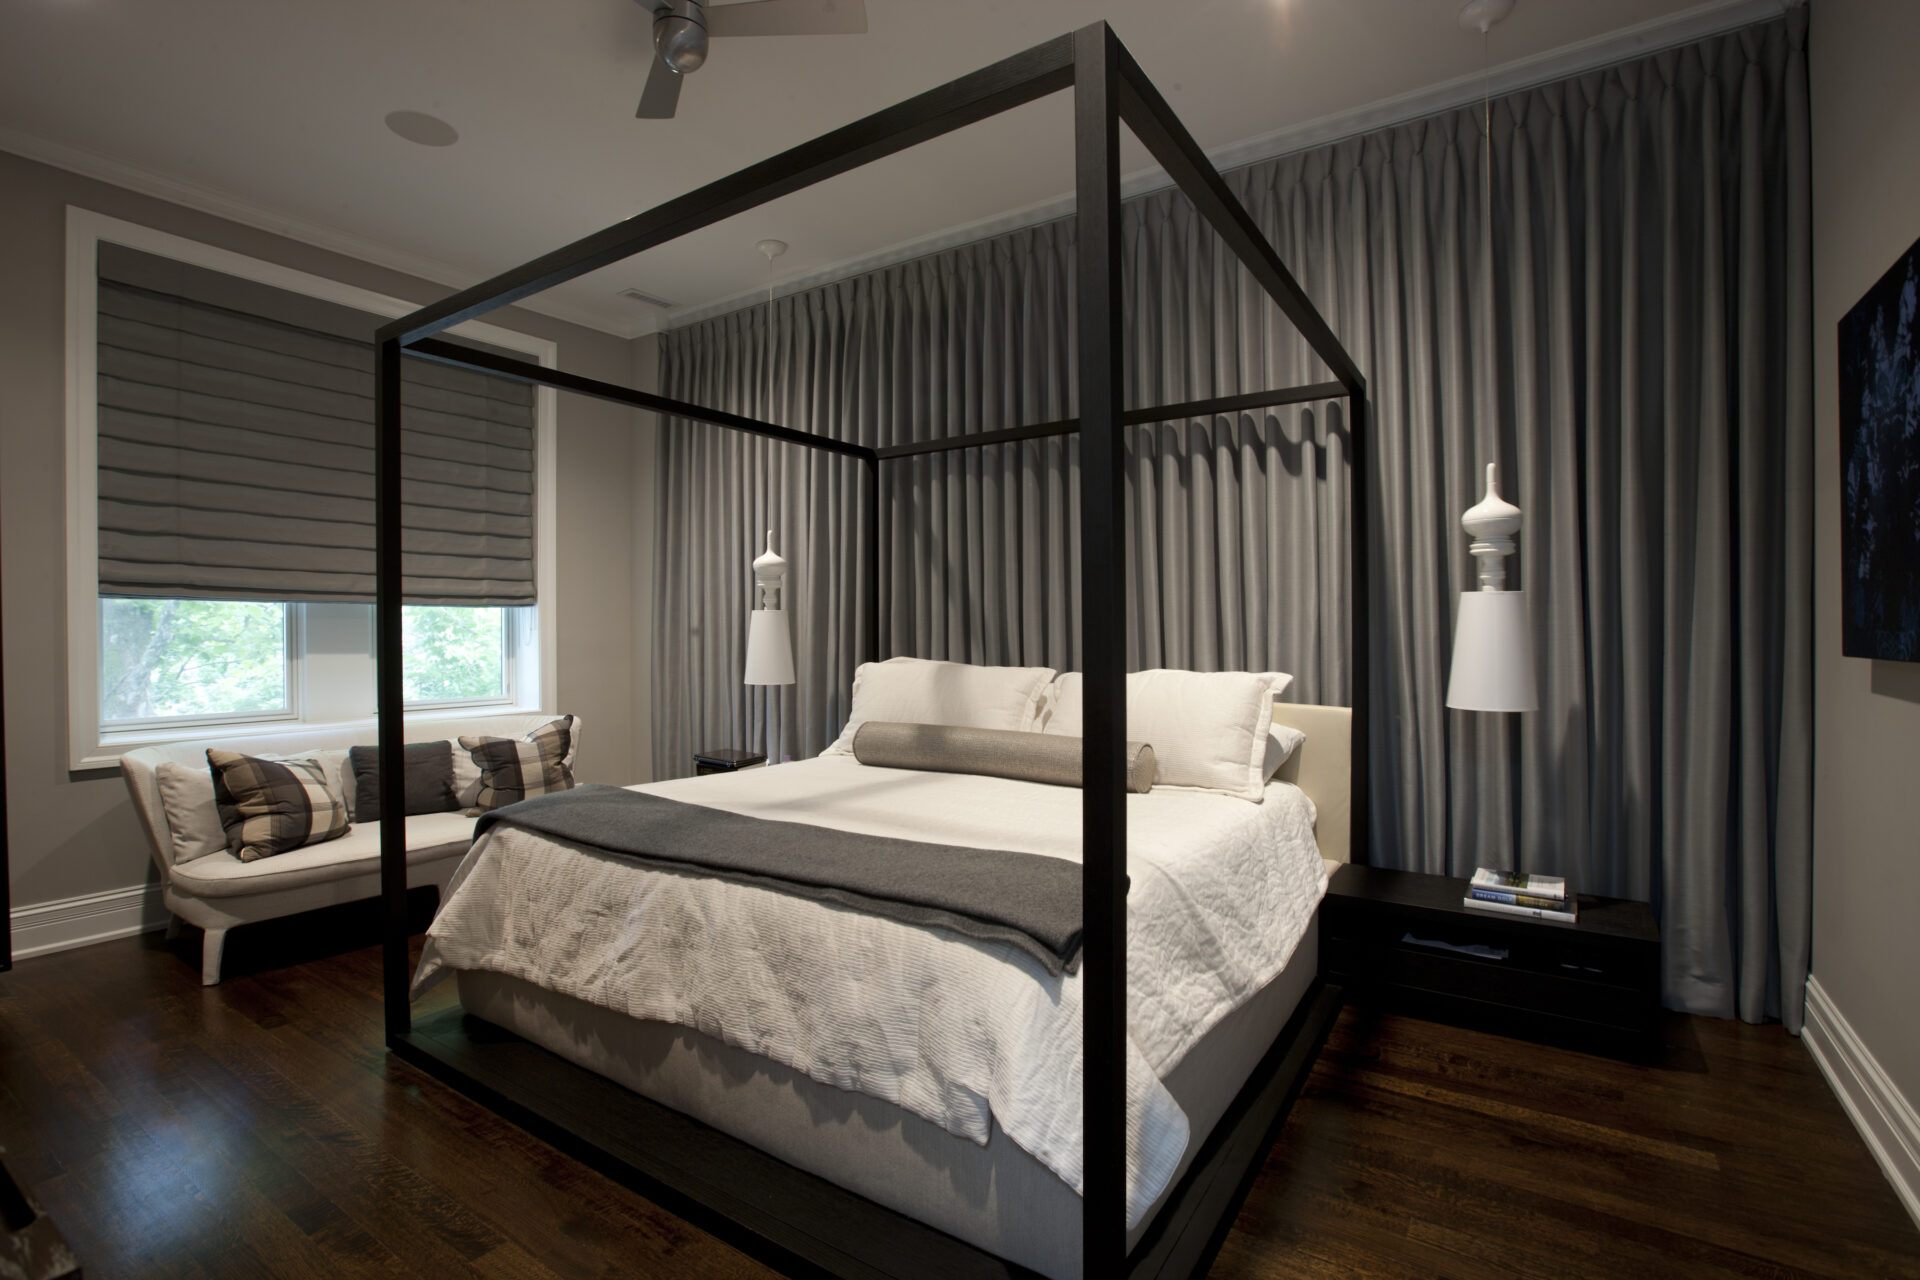 Modern cube bed frame matching sleek modern style bedroom